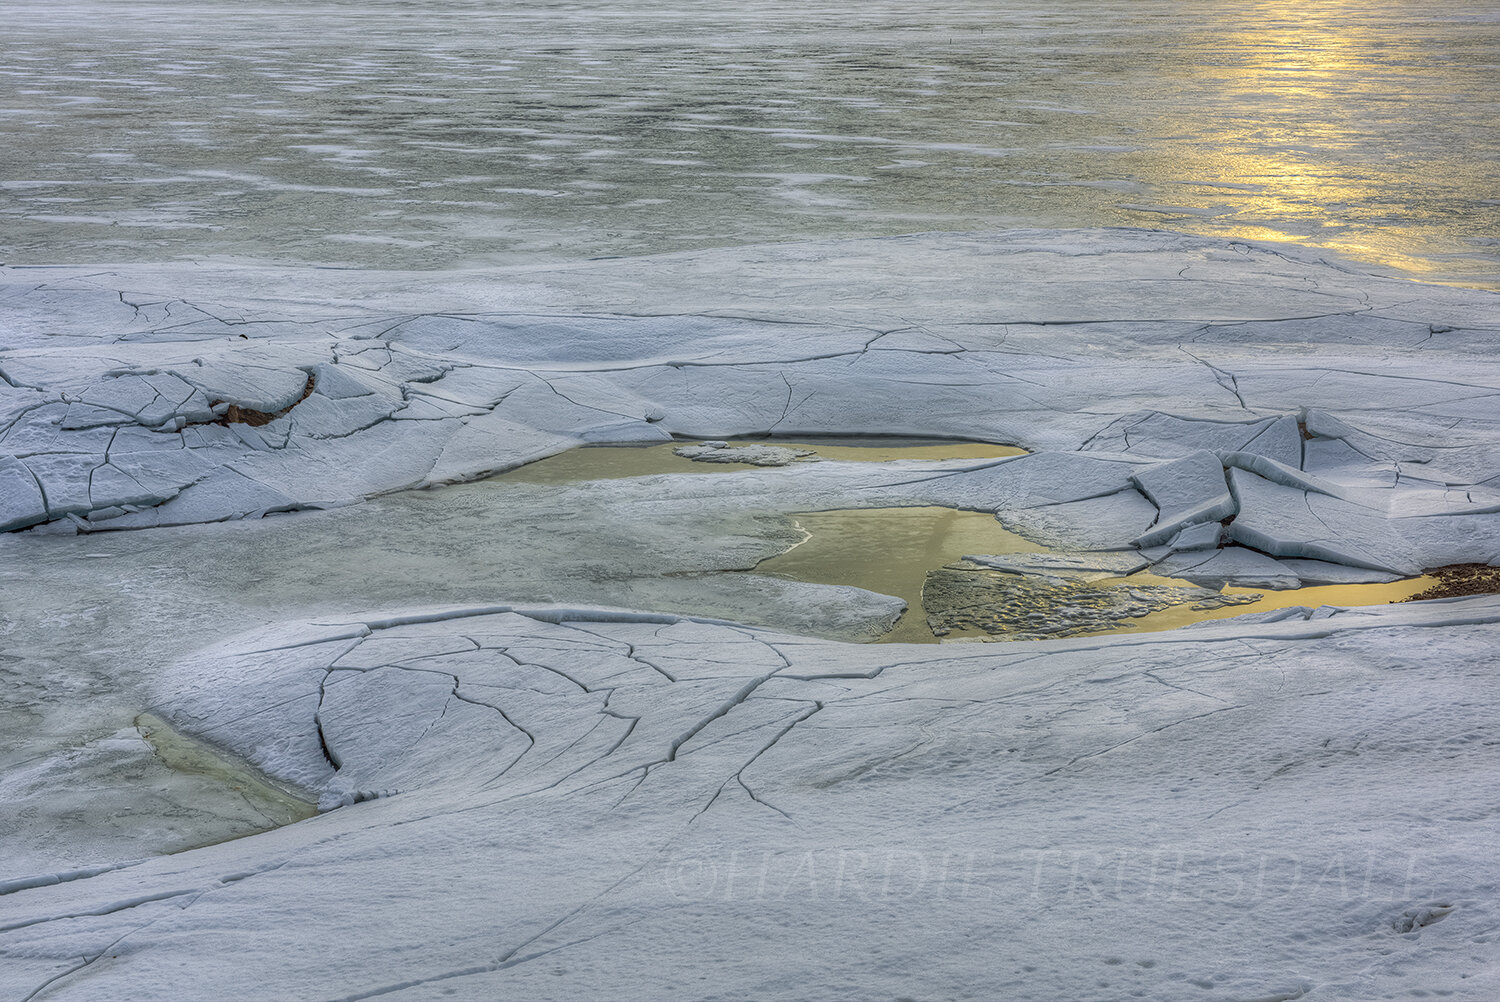 Cks#305 "Evening Ice", Ashokan Reservoir